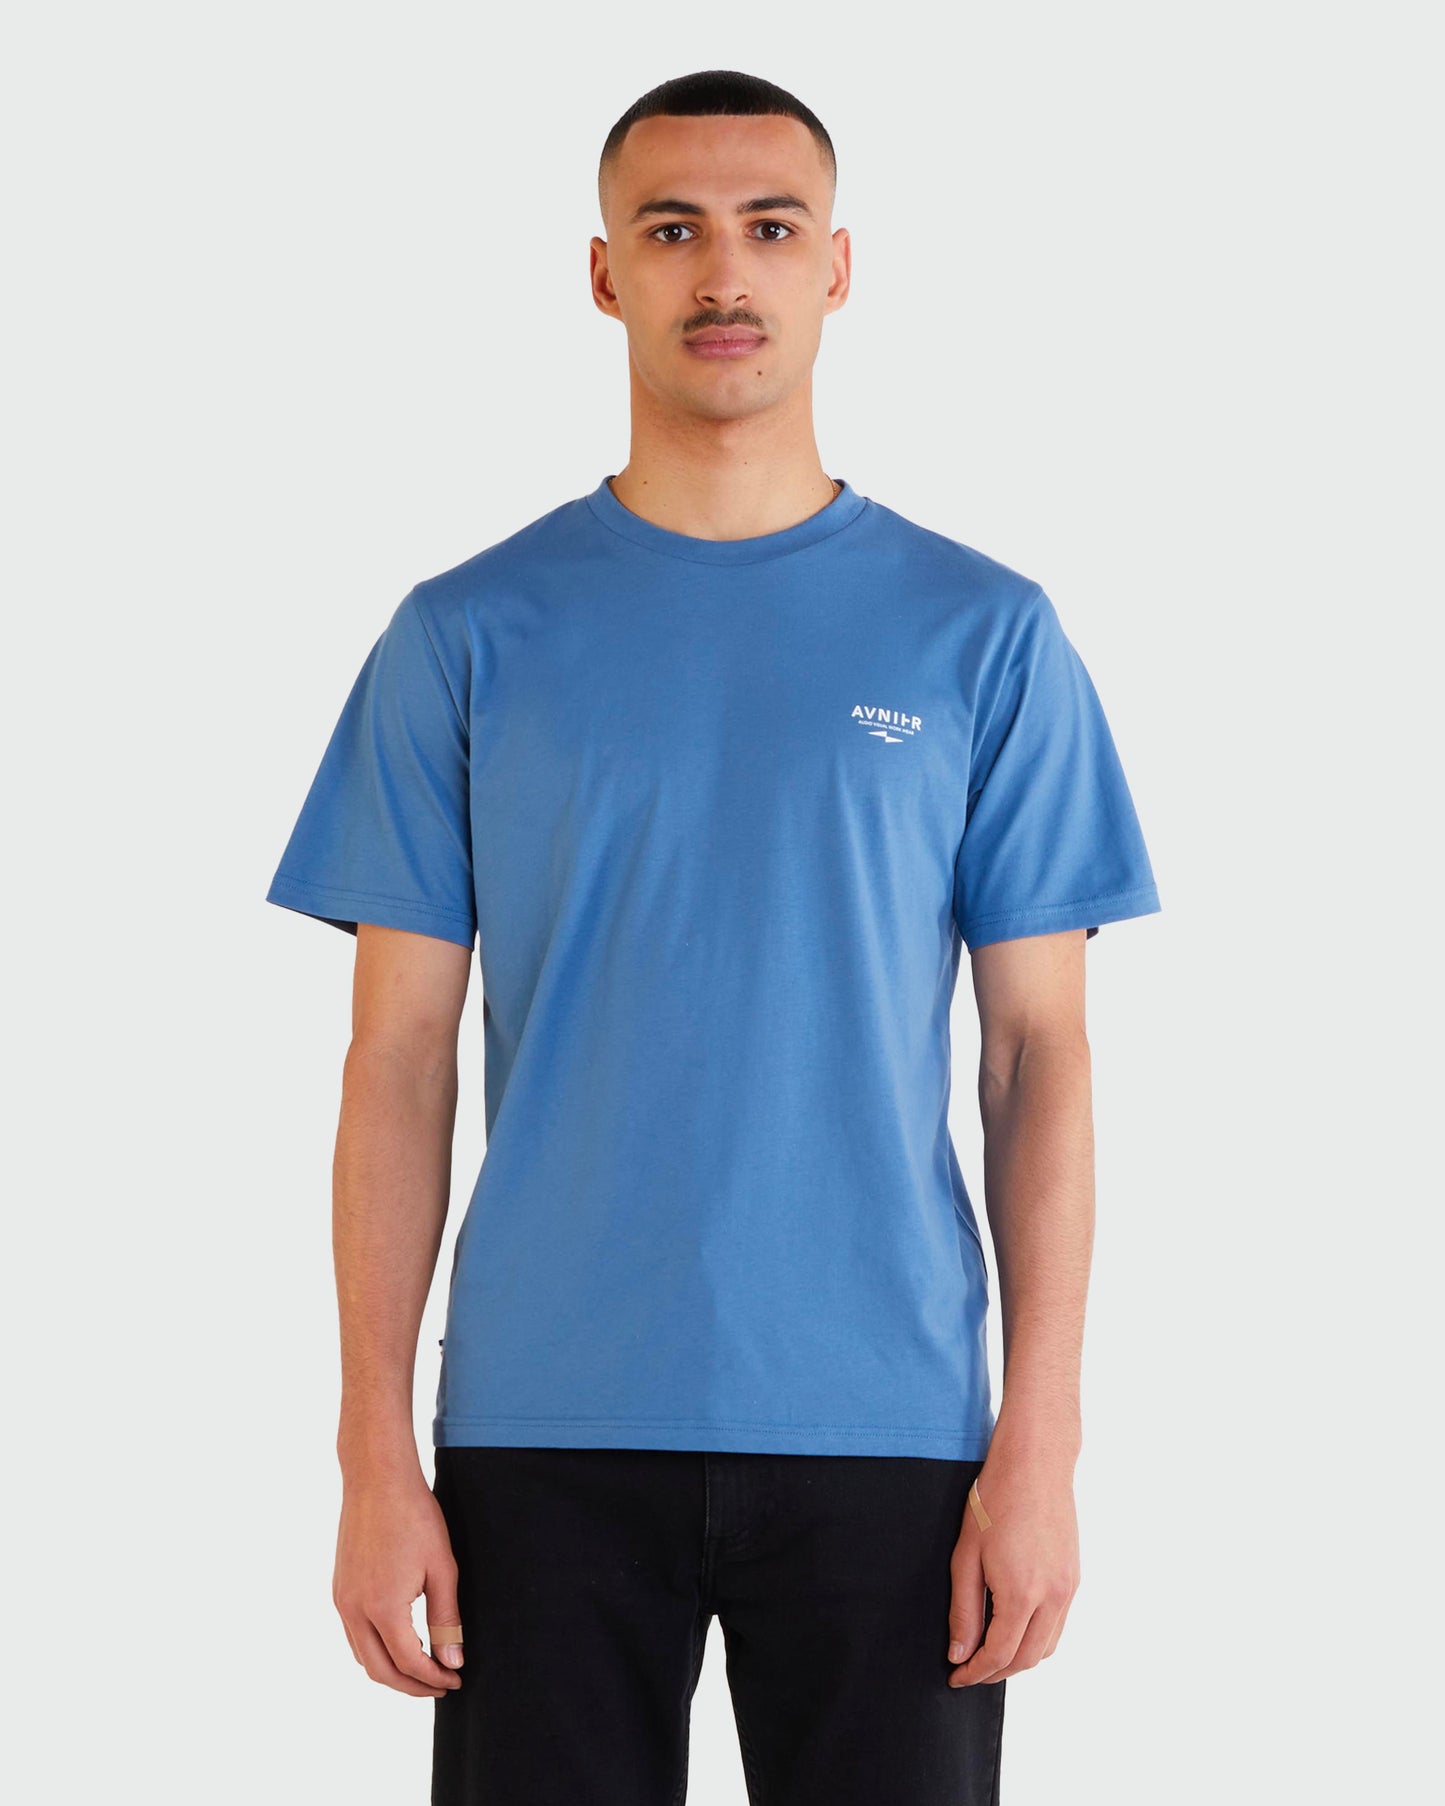 t-shirt-source-bleu-horizon-avnier-avnier-4-silhouette-look - bleu horizon